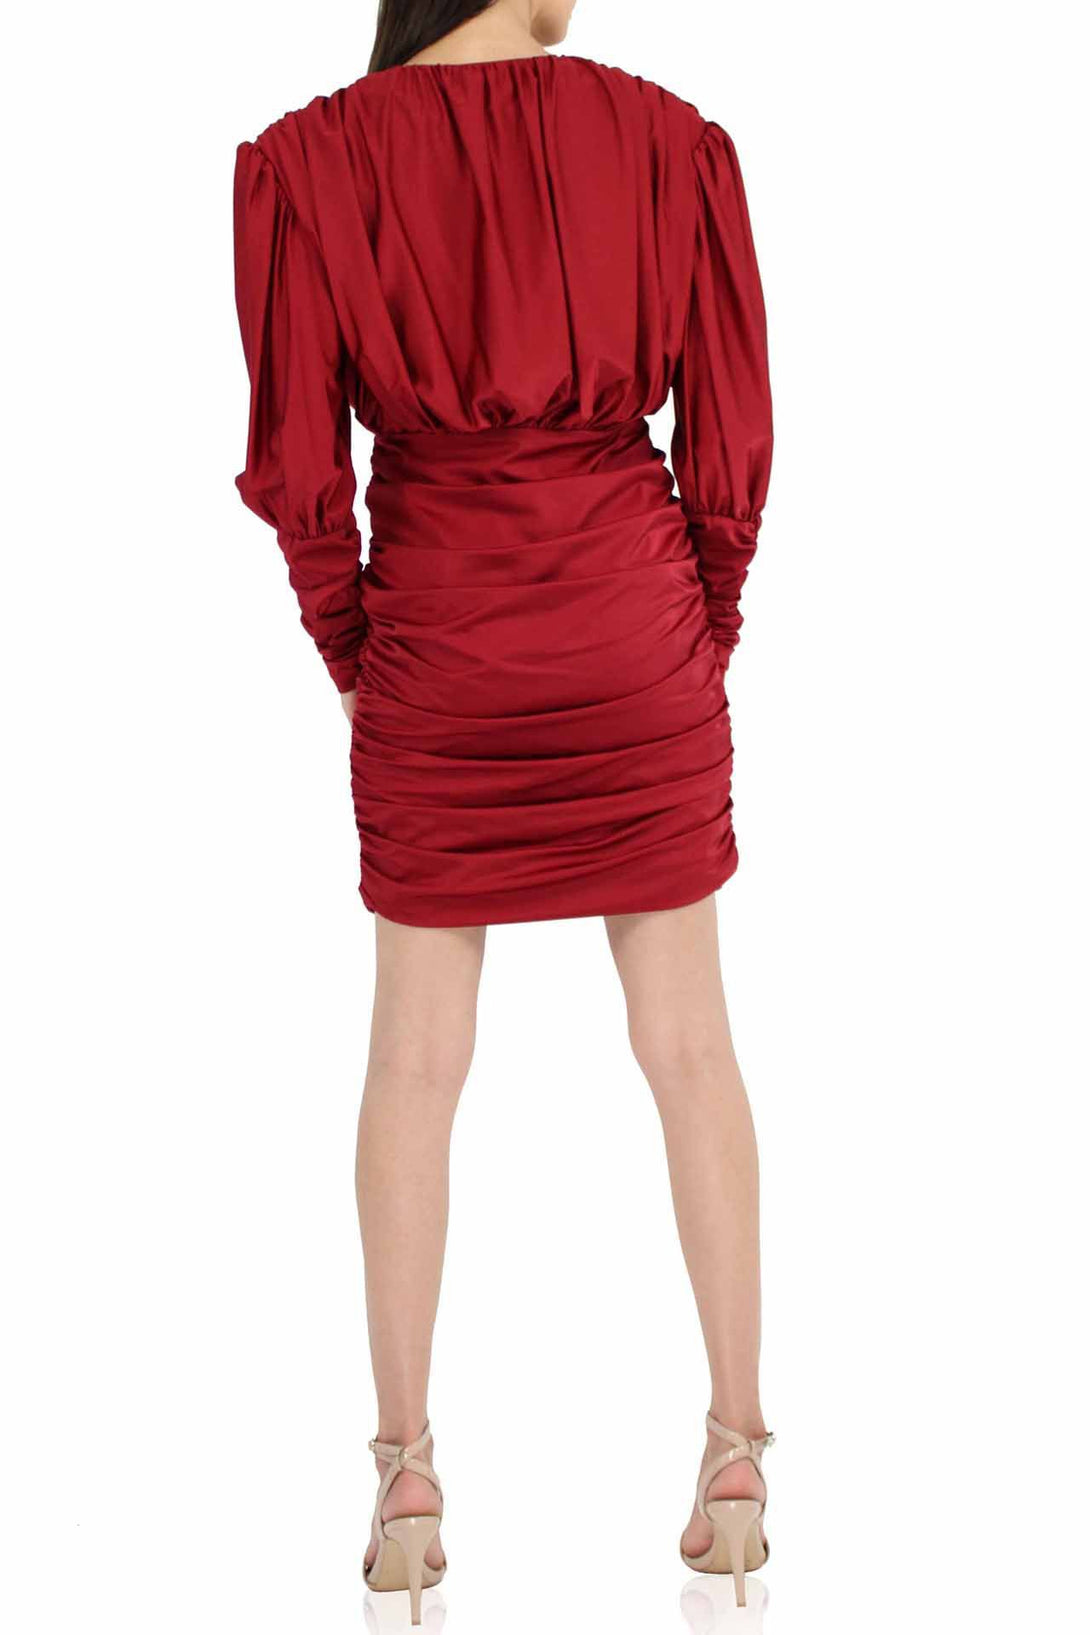 Embellished-Designer-Mini-Dress-In-Red-From-Kyle